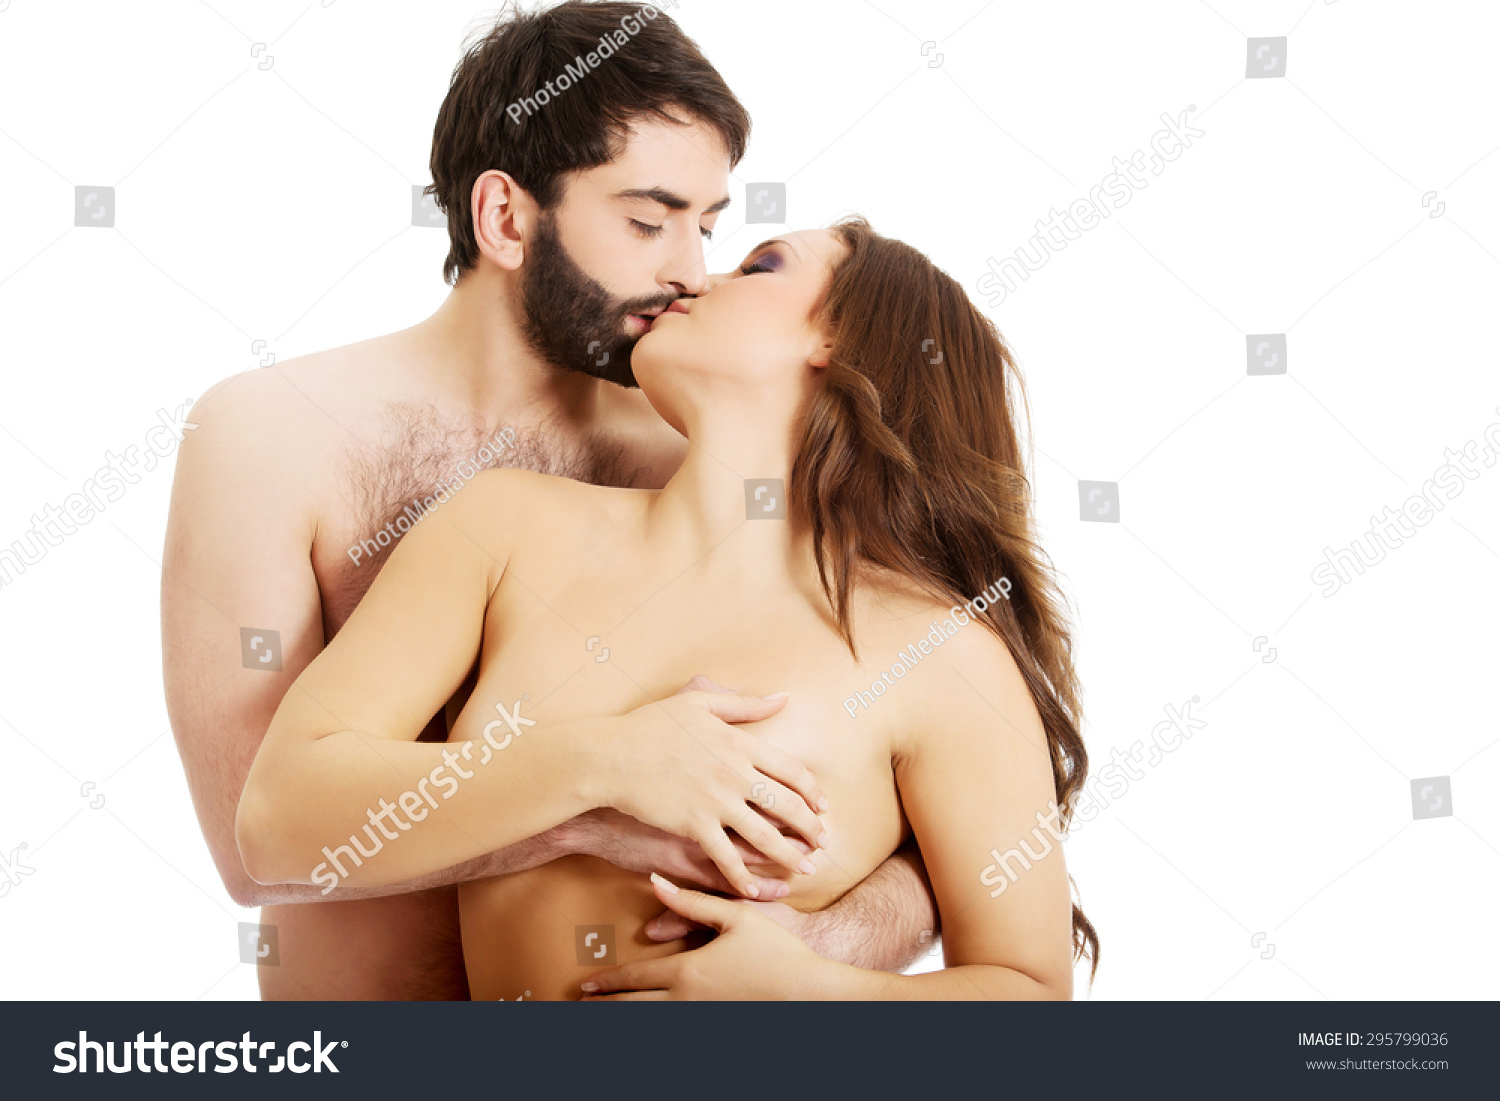 dilla arman add photo girls kissing girls breasts